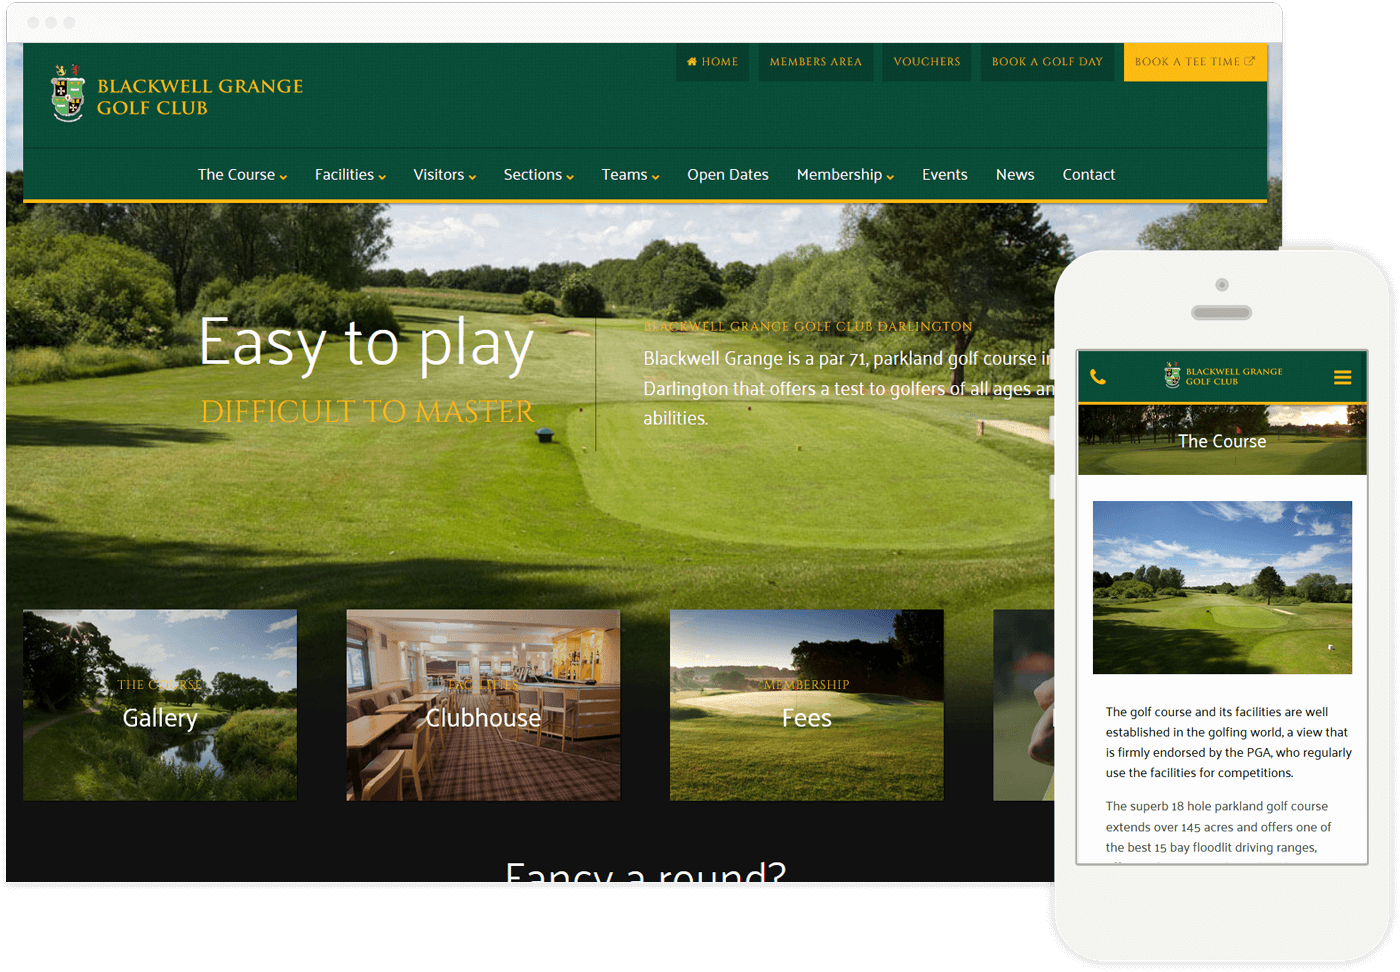 Blackwell Grange Golf Club Featured Image